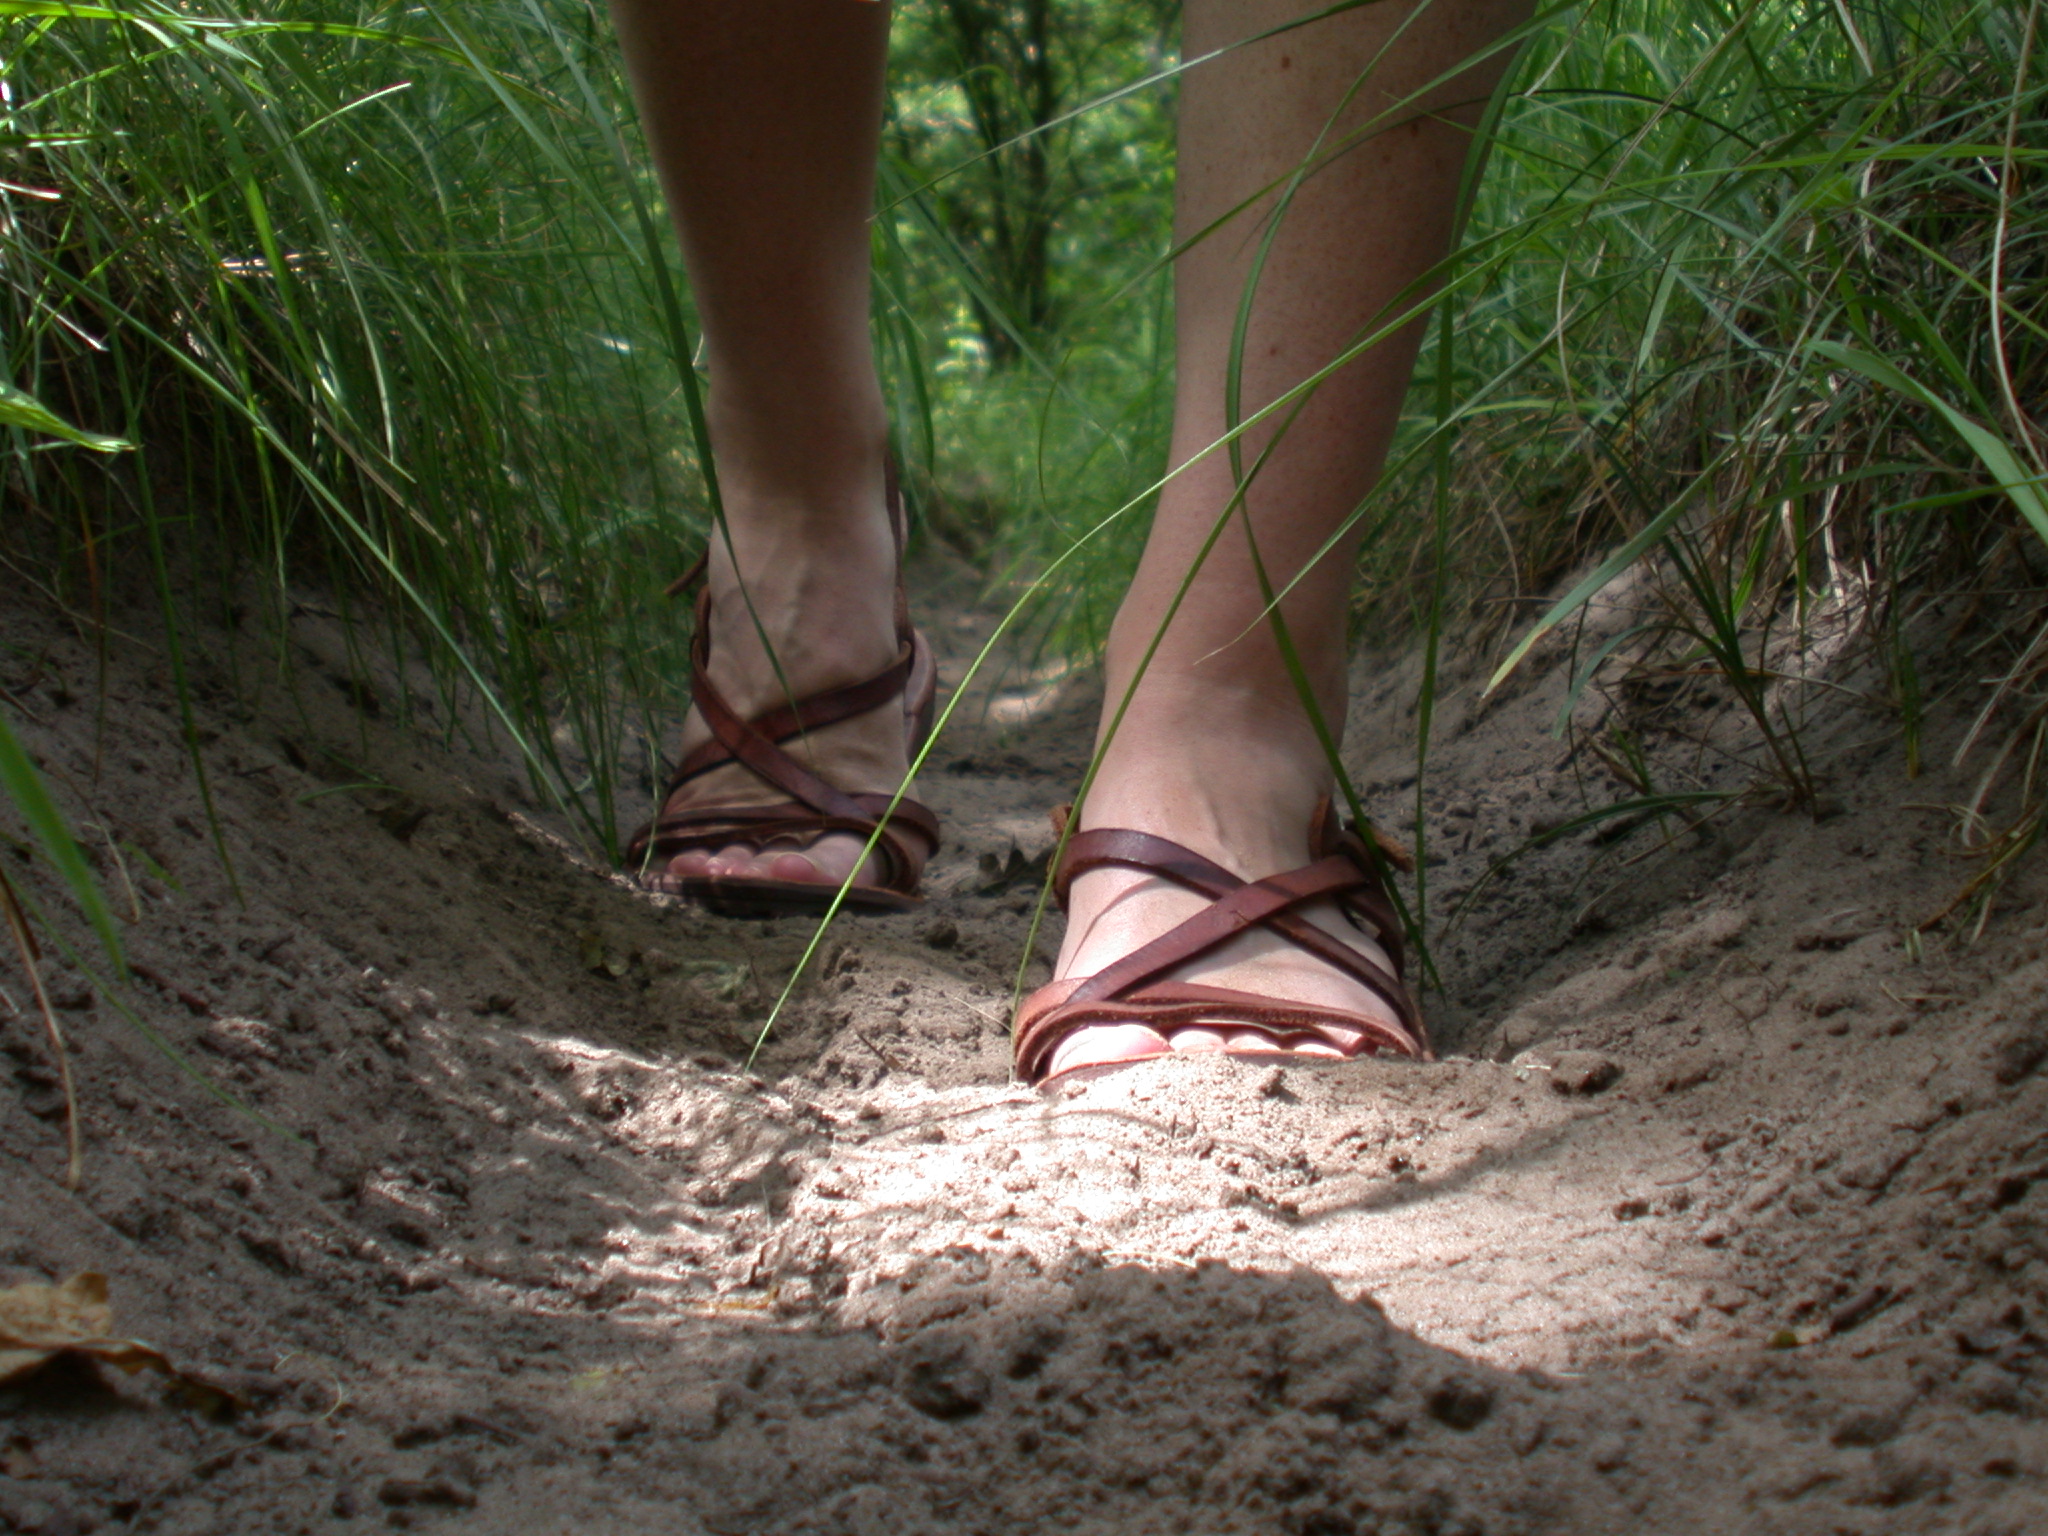 ... *After : images : feet legs path forest walking walk steps sand grass